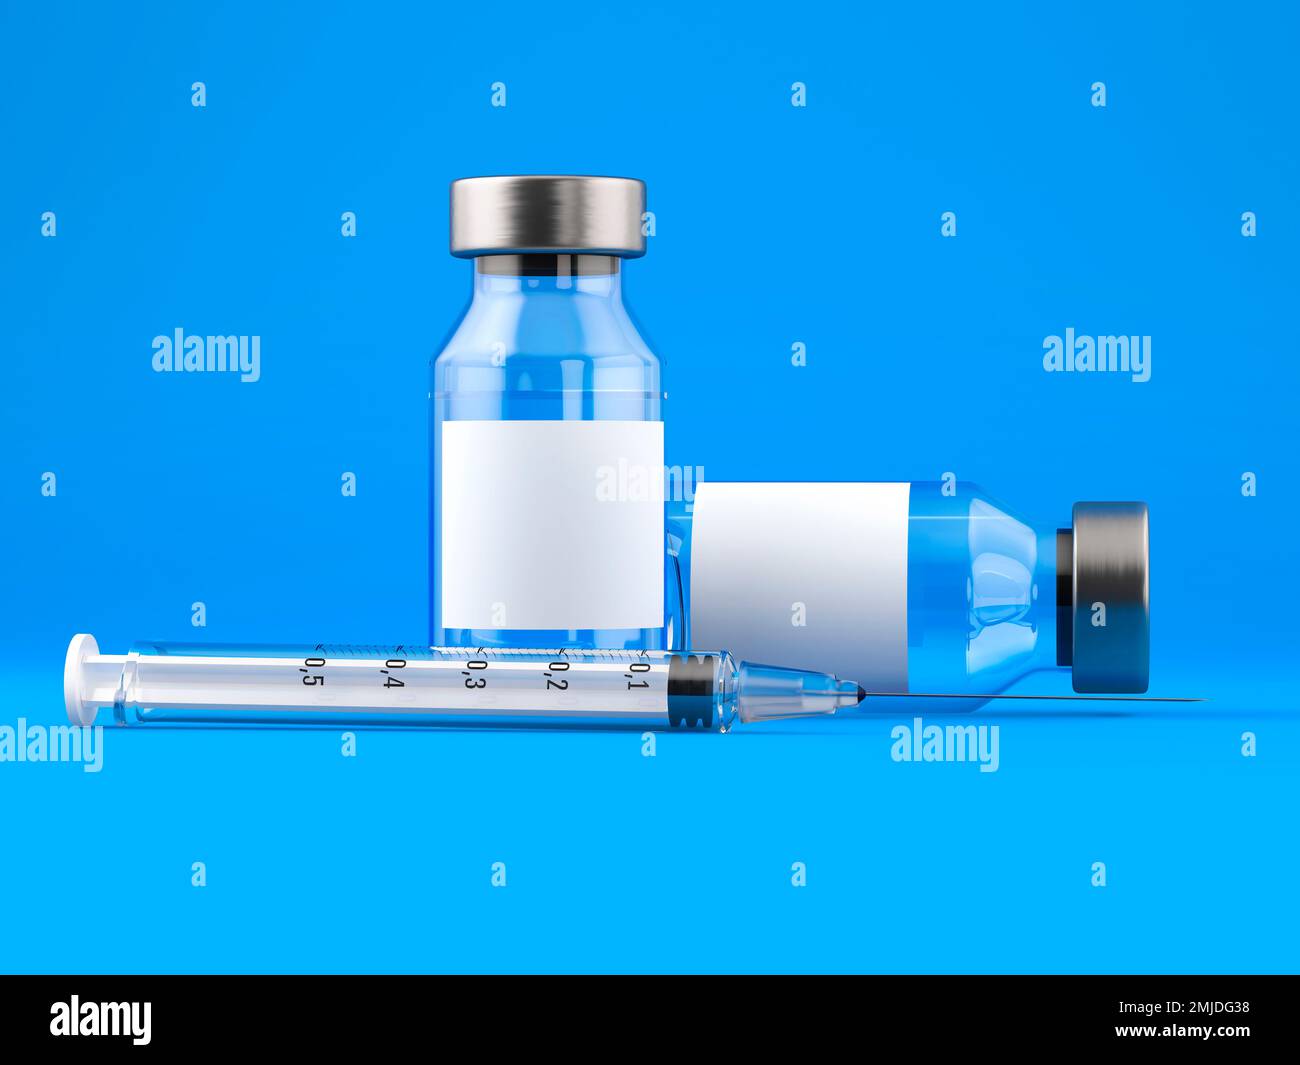 Phials and syringes, illustration Stock Photo